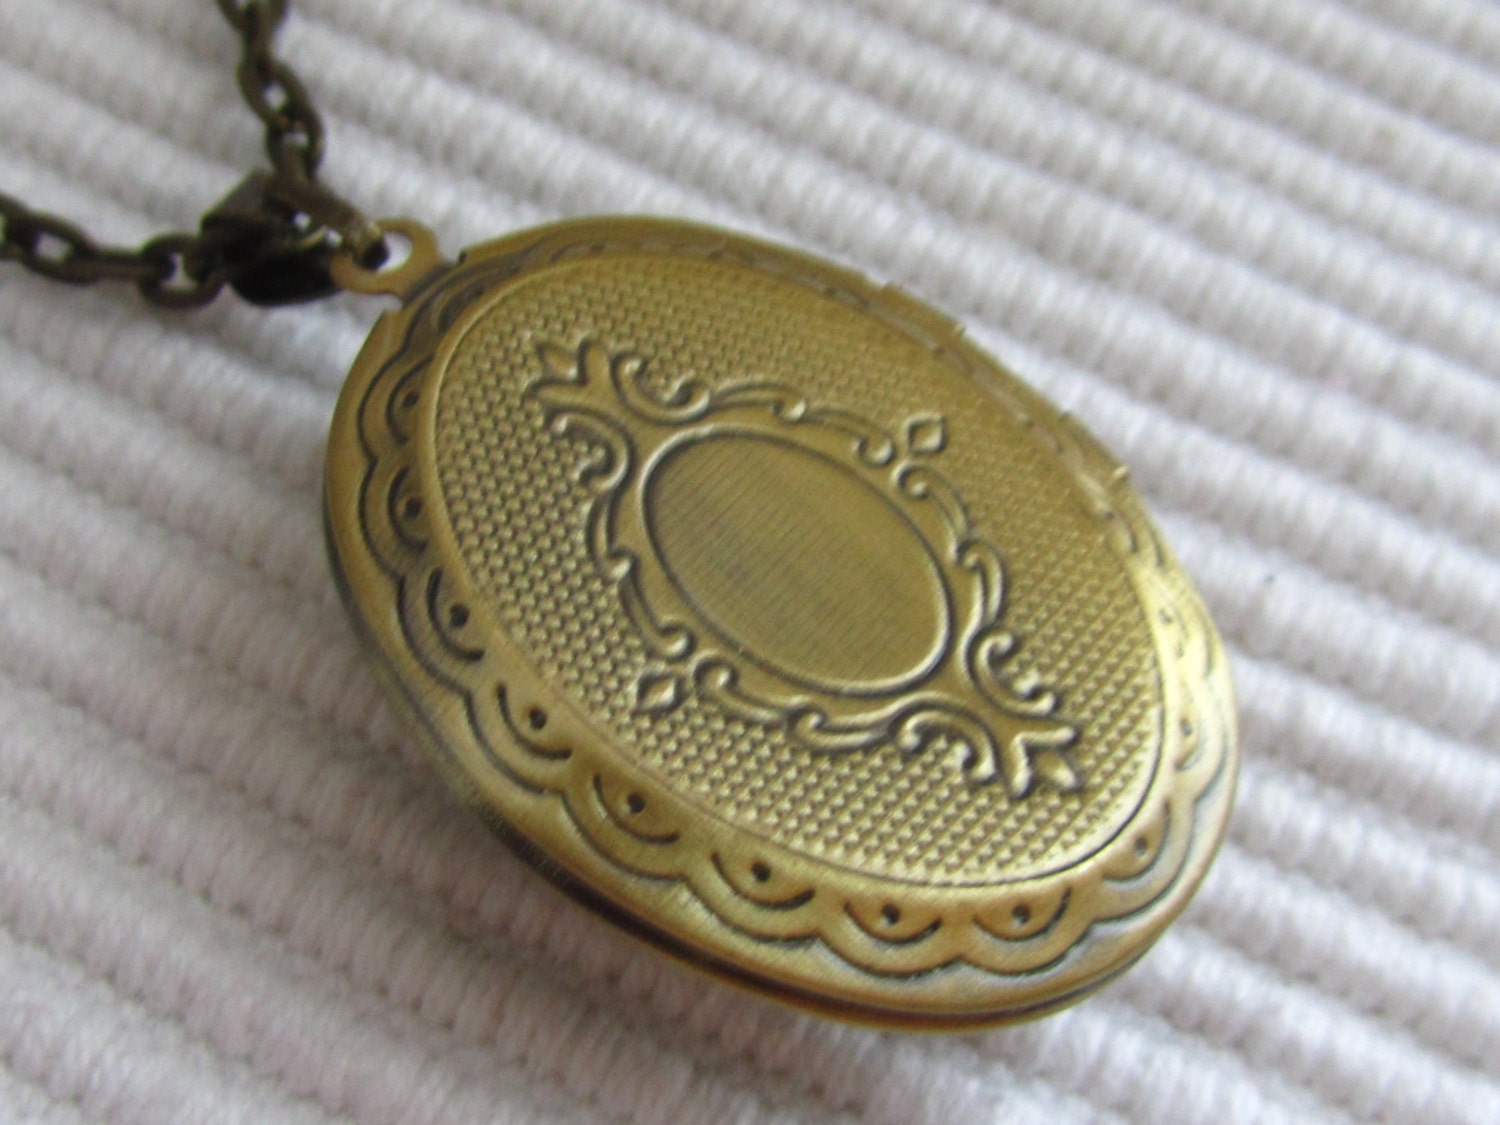 Steampunk oval locket necklace vintage watch movement 2 | Etsy